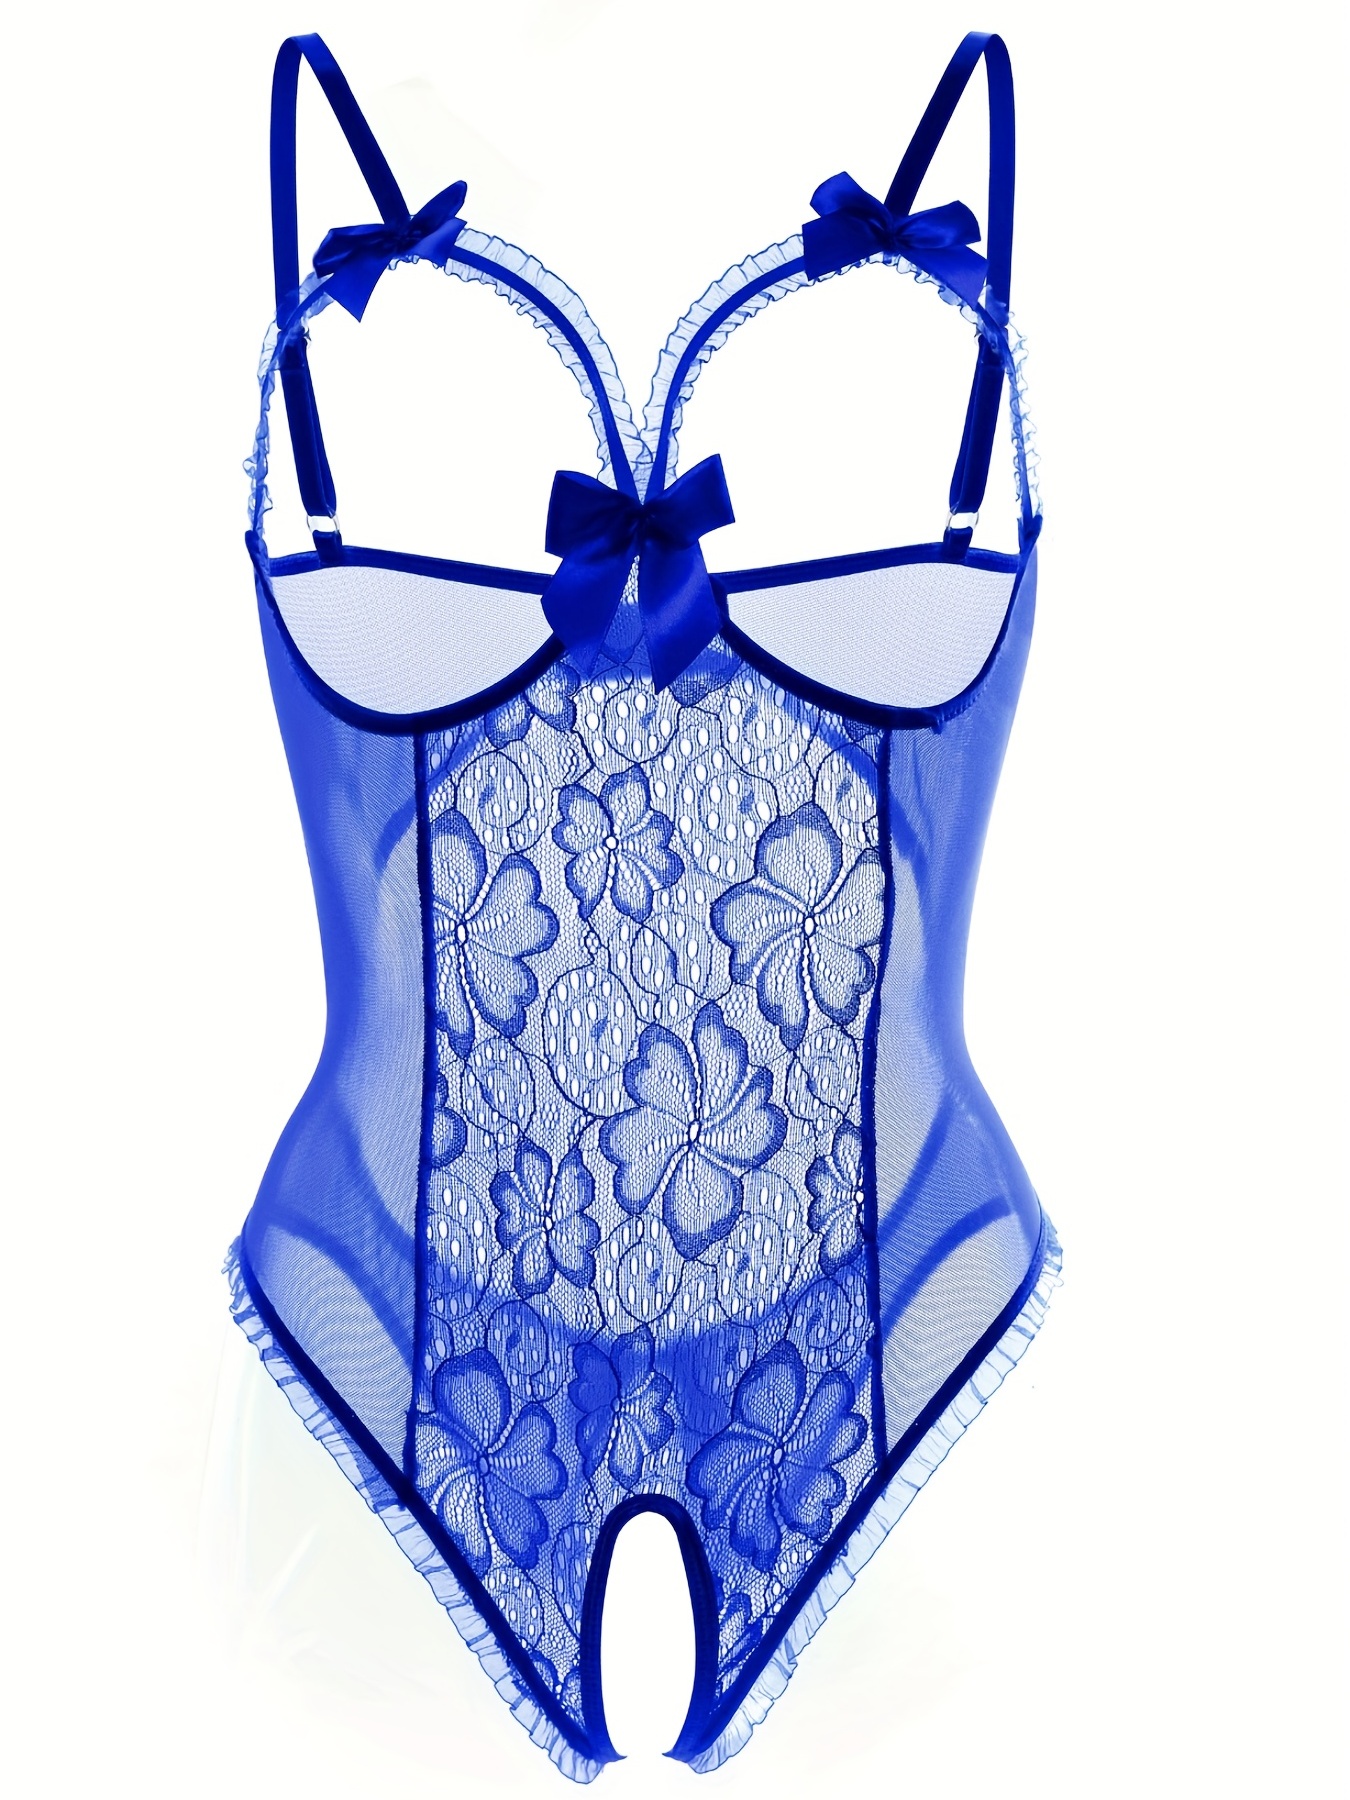 PMUYBHF Bodysuits Women's Lace Mesh Splicing French Style Butterfly Bow  Sheer Bodysuit Seductive Lingerie Women underwear Boyshorts Cotton Womens